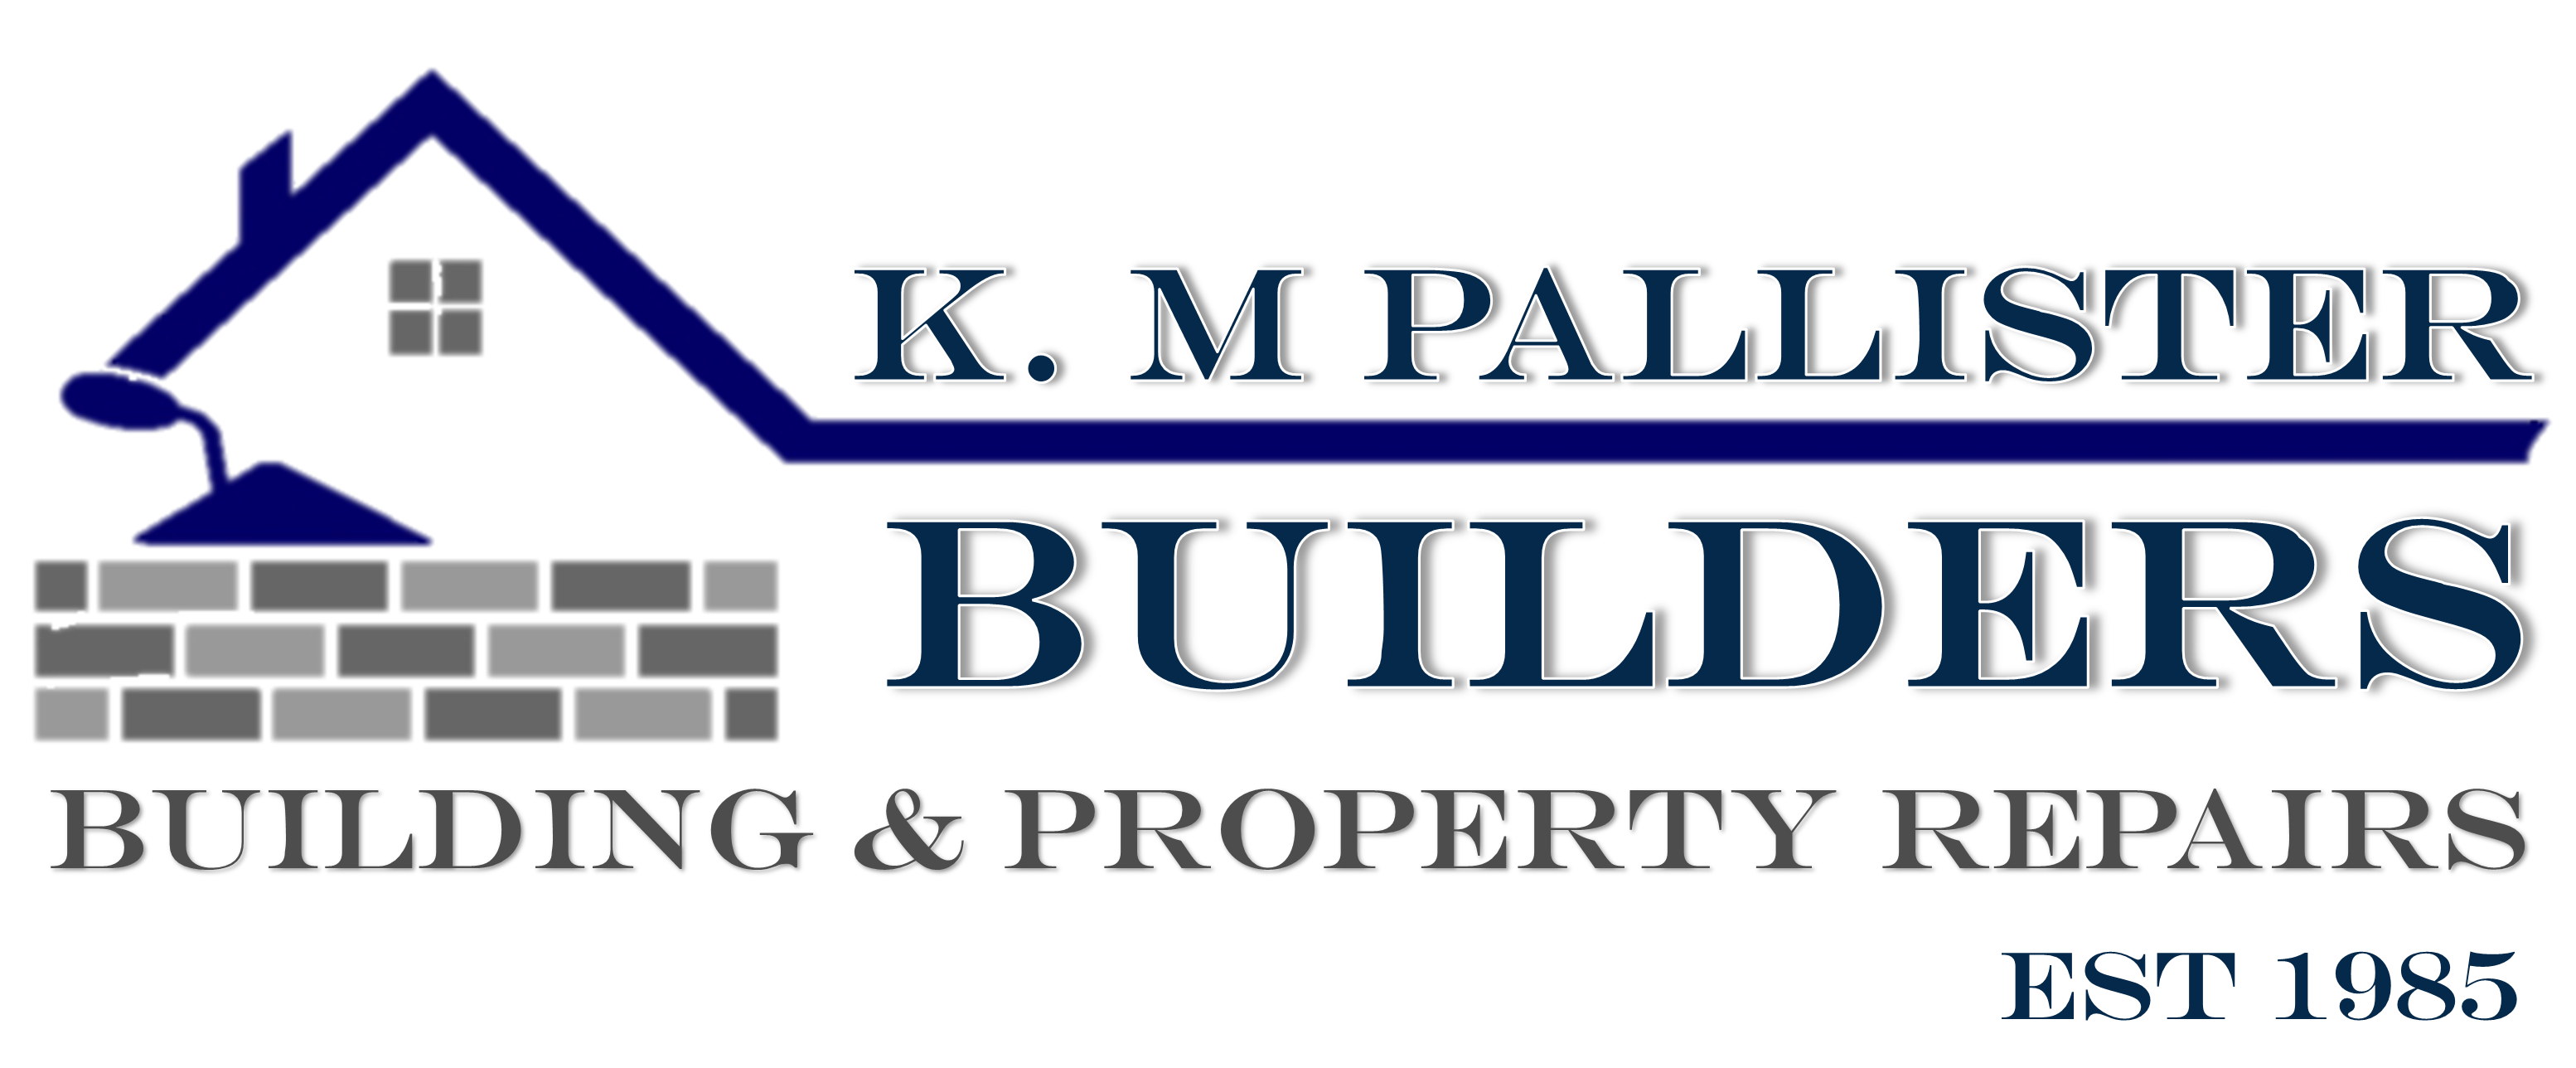 K.M Pallister Builders